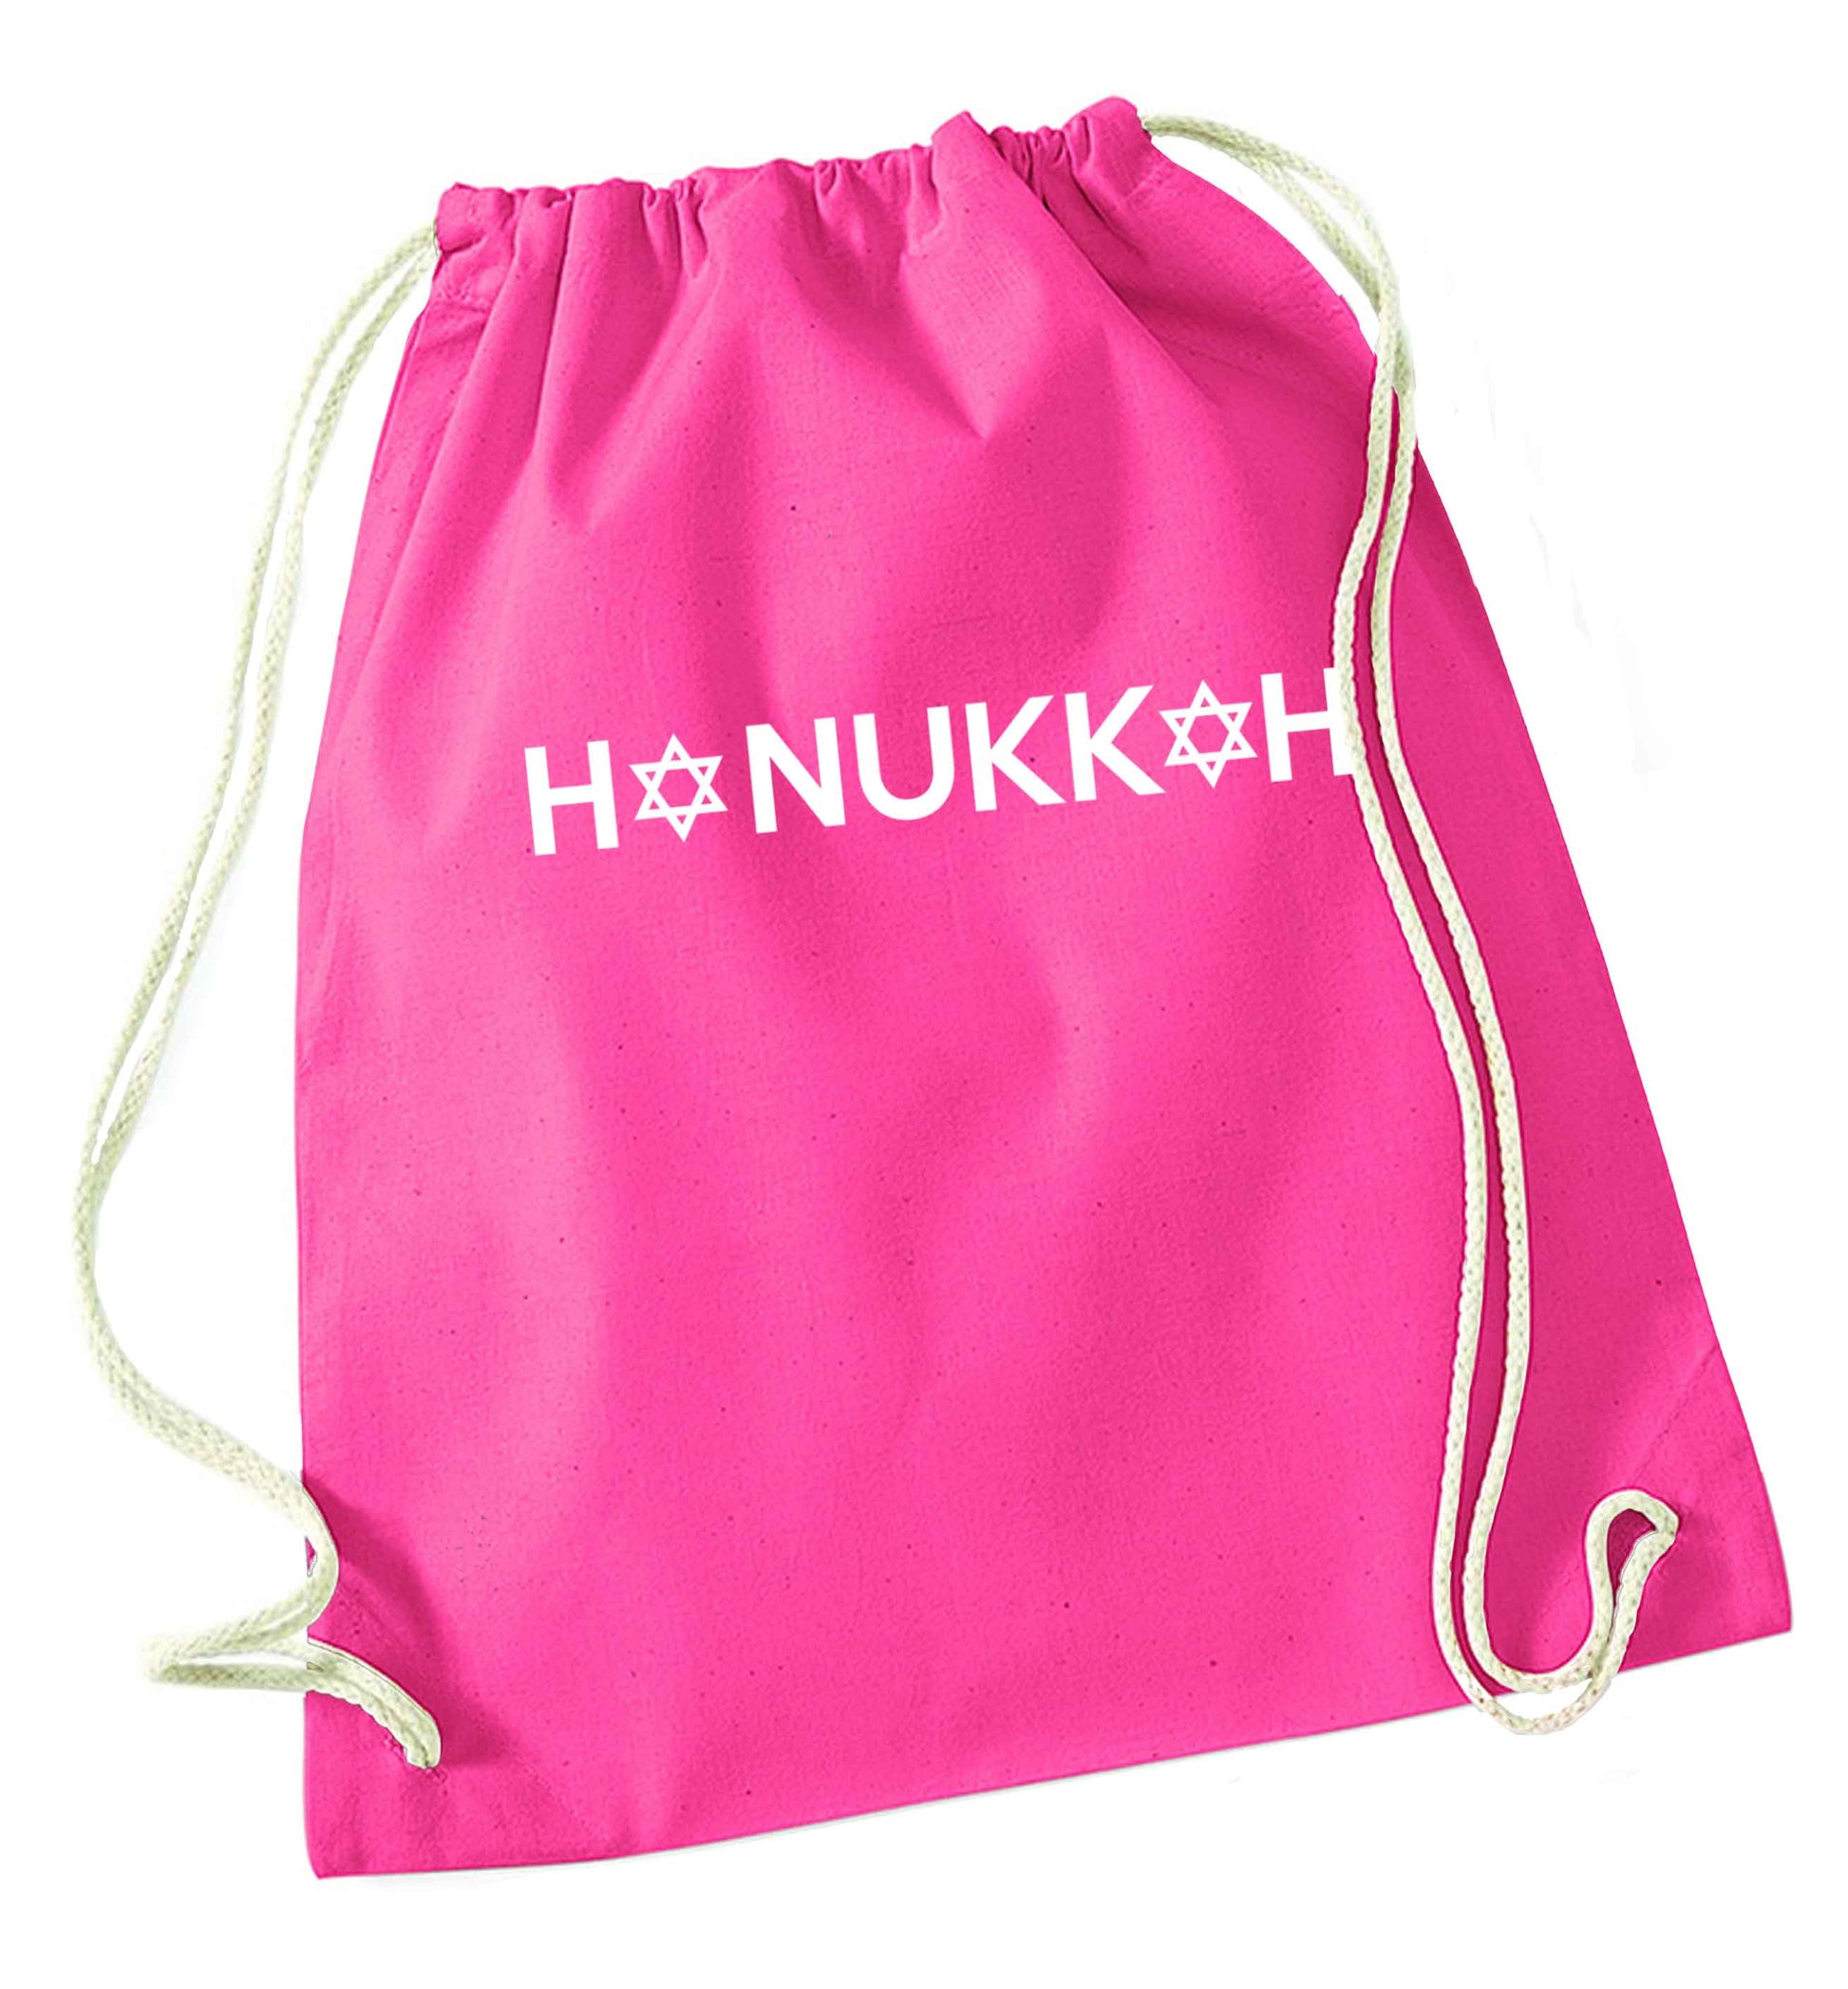 Hanukkah star of david pink drawstring bag